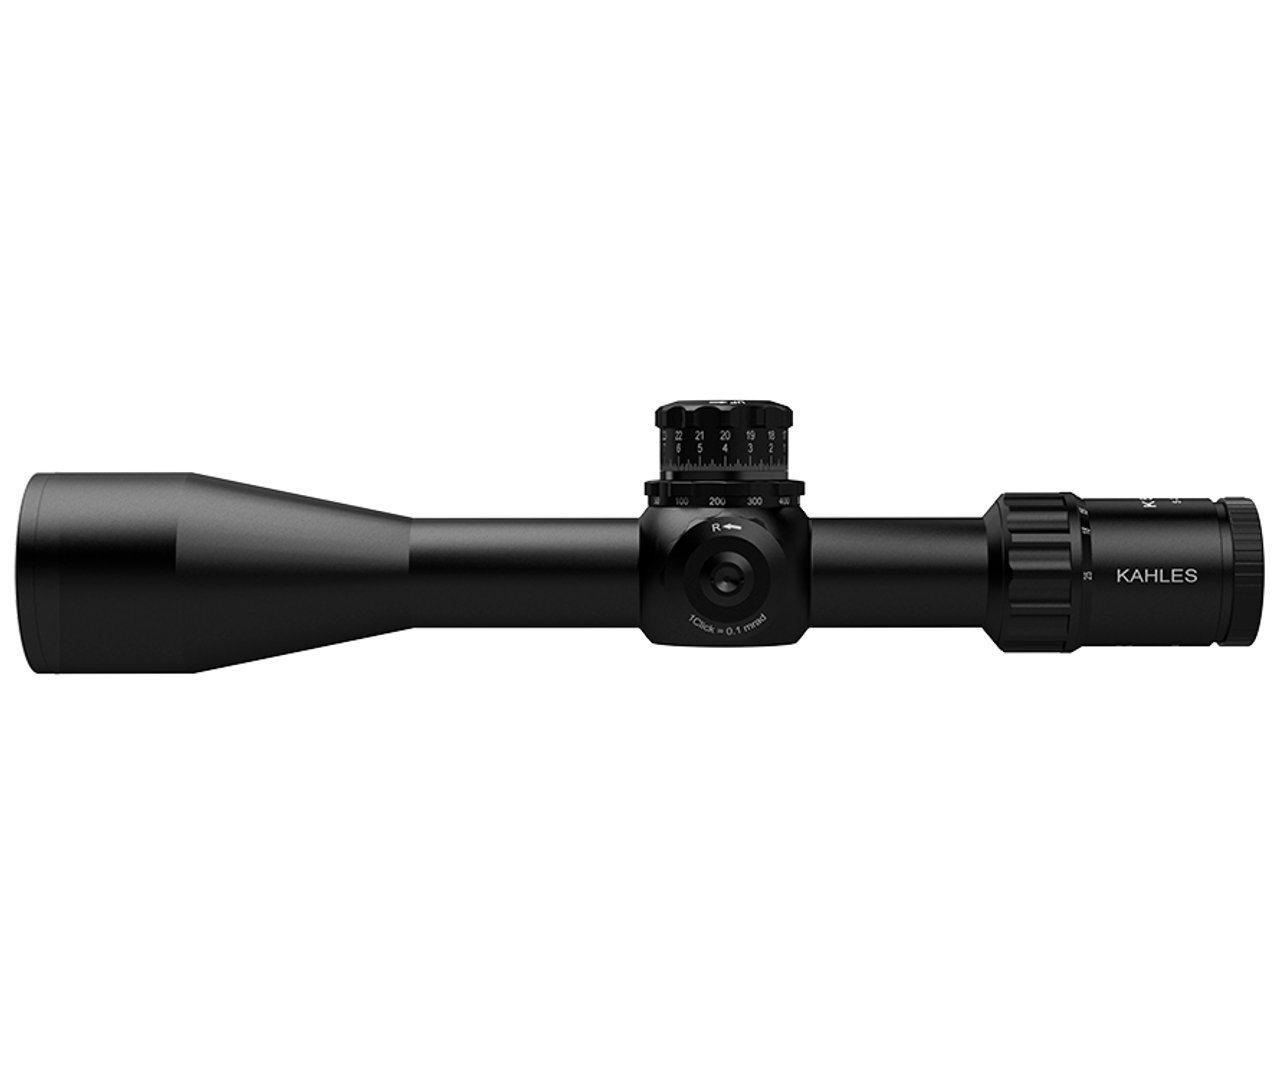 Kahles K624i Rifle Scope 6 24x 56mm Skmr2 Reticle